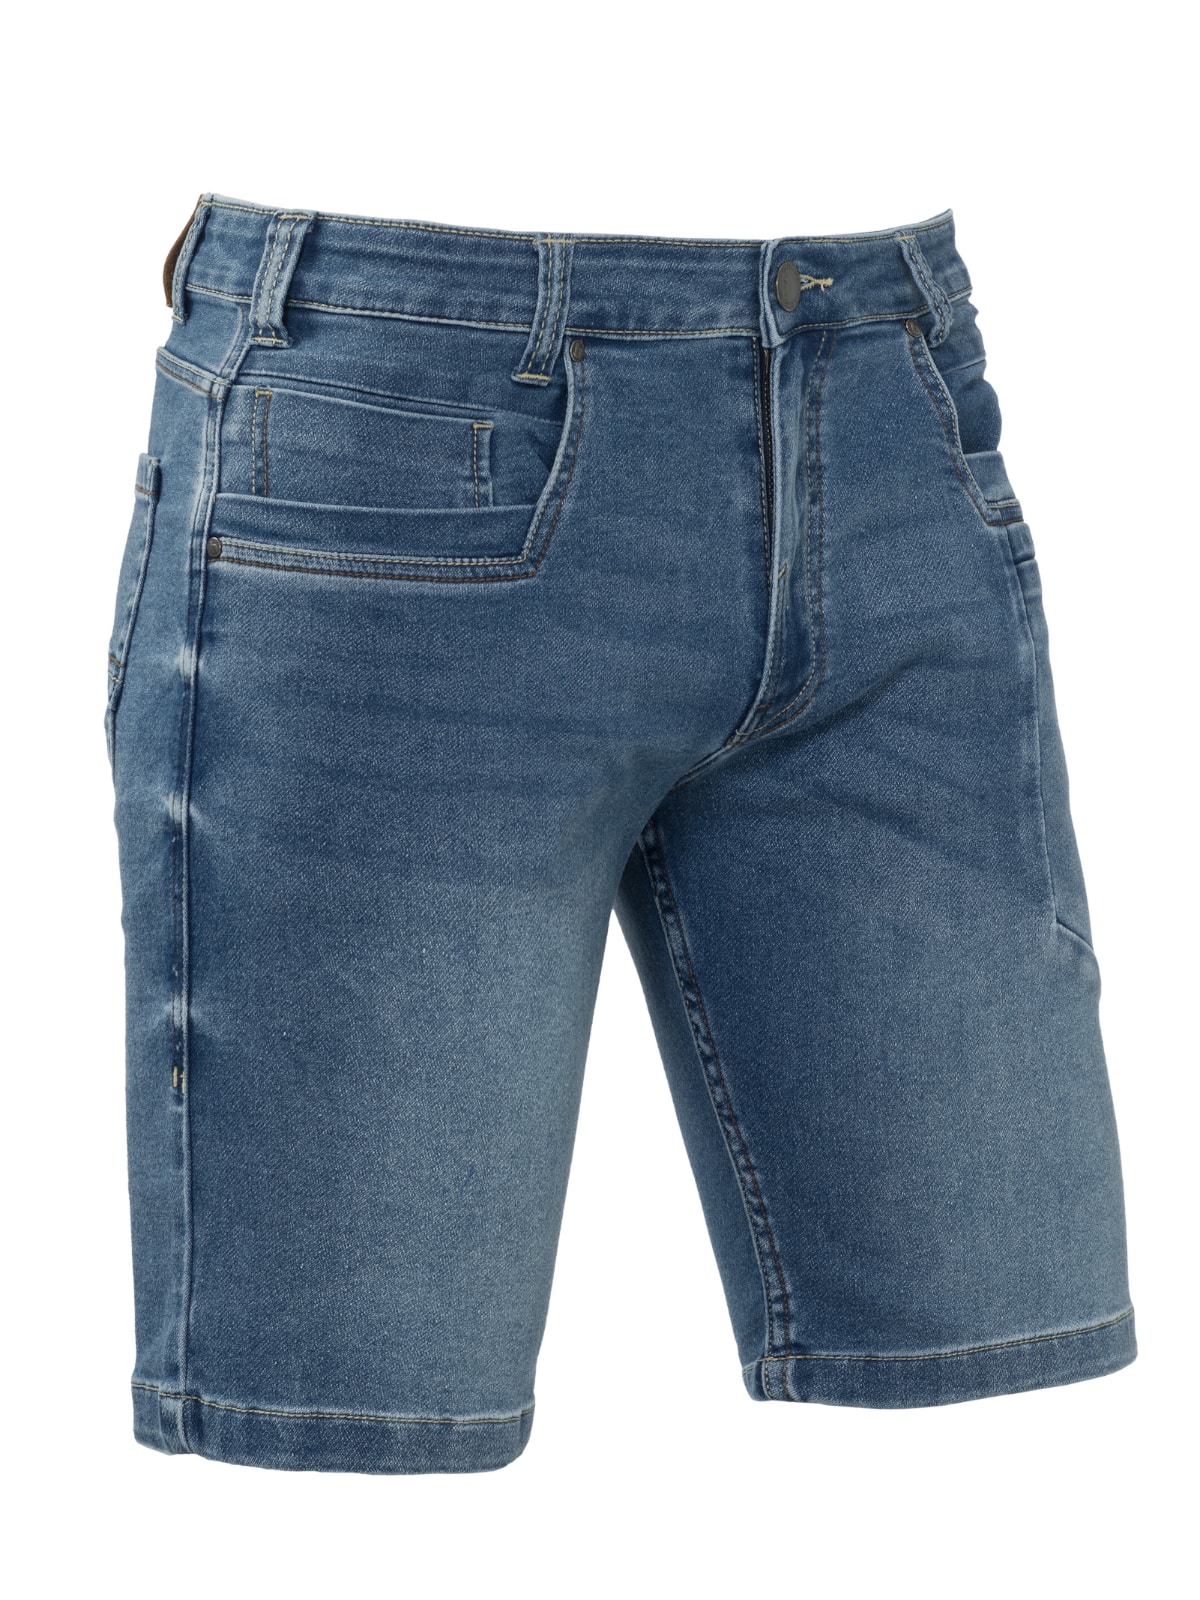 hongersnood Haven ontrouw Brams Paris - Denim short stretch medium blue met zak - Jojo jeans